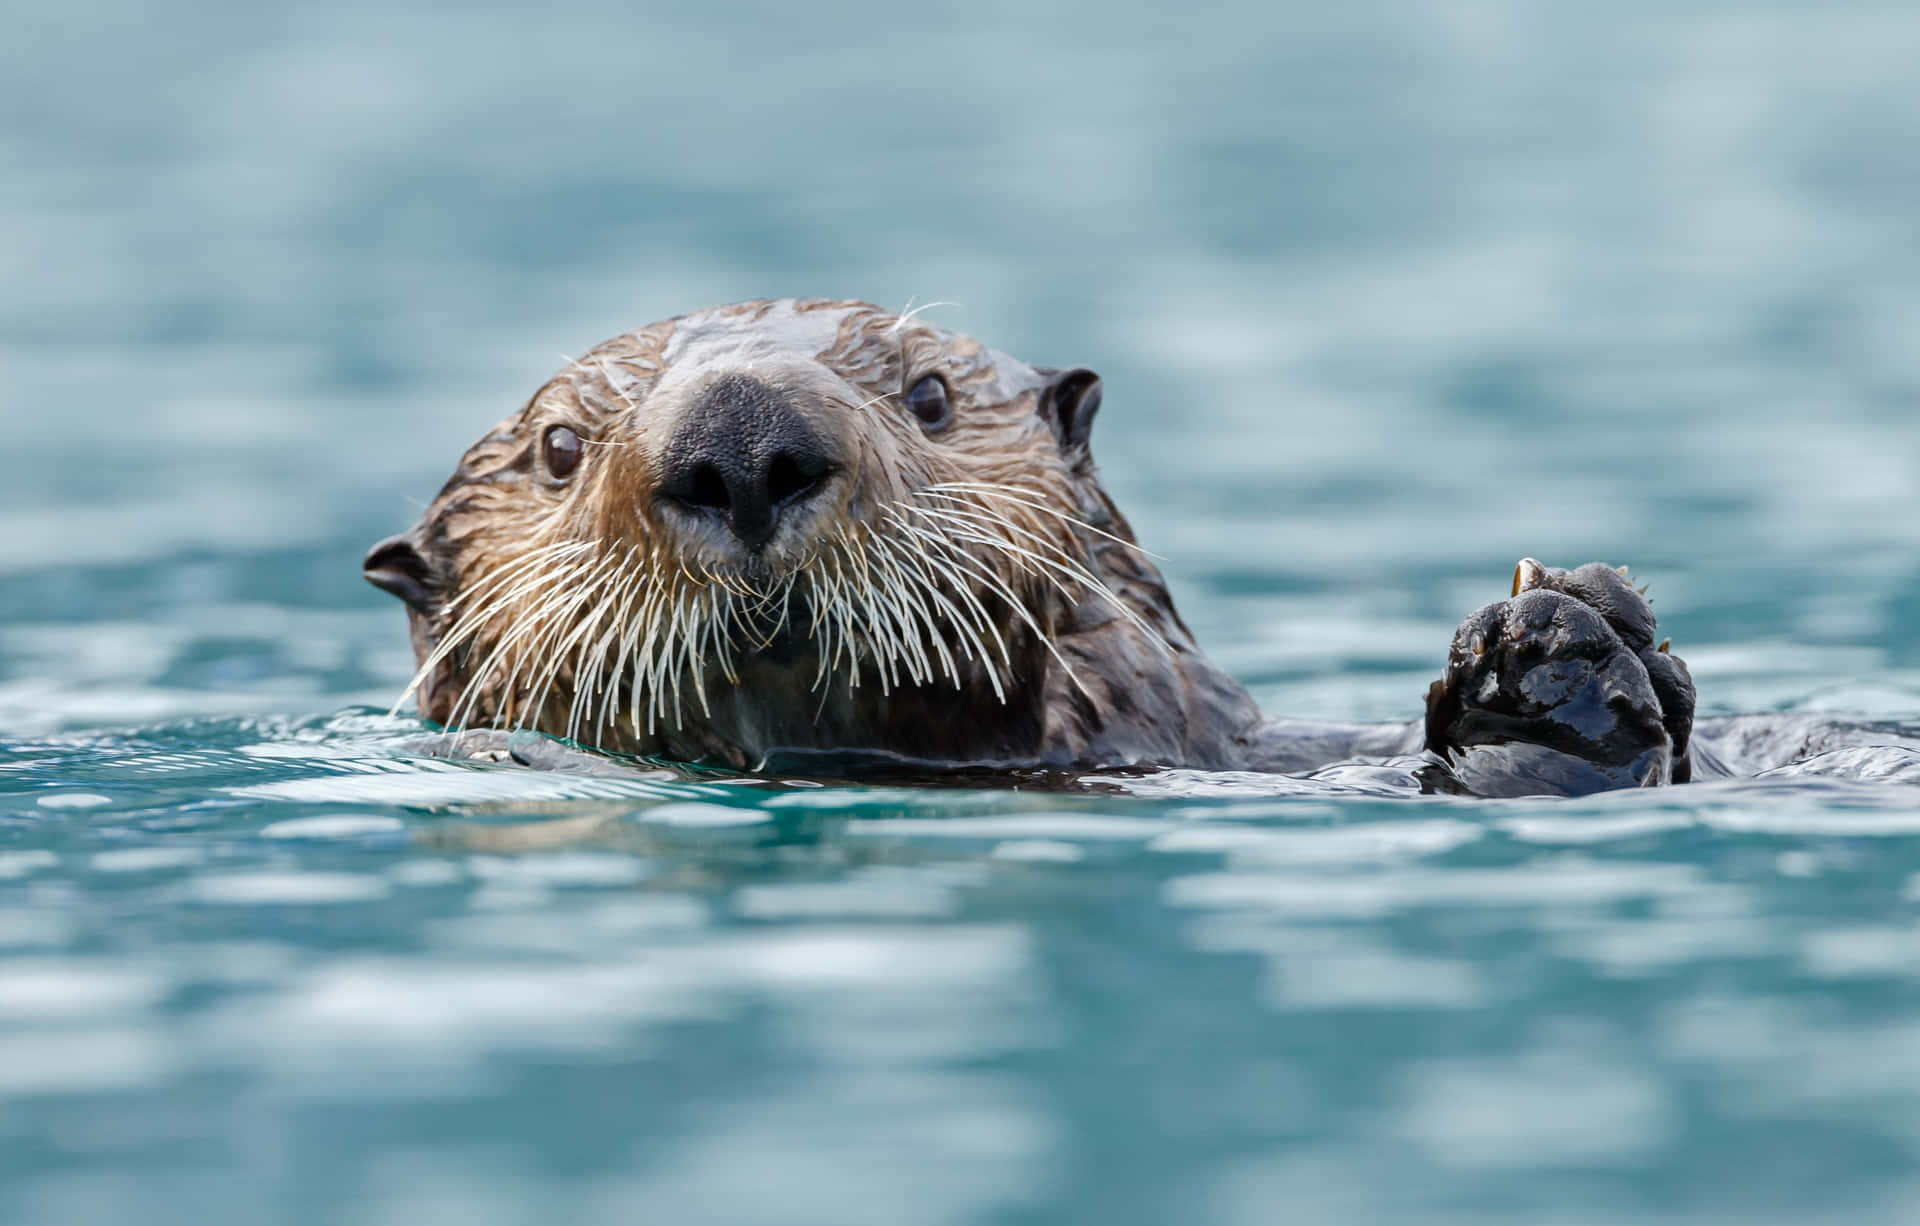 Sea Otter Floatingin Water.jpg Wallpaper